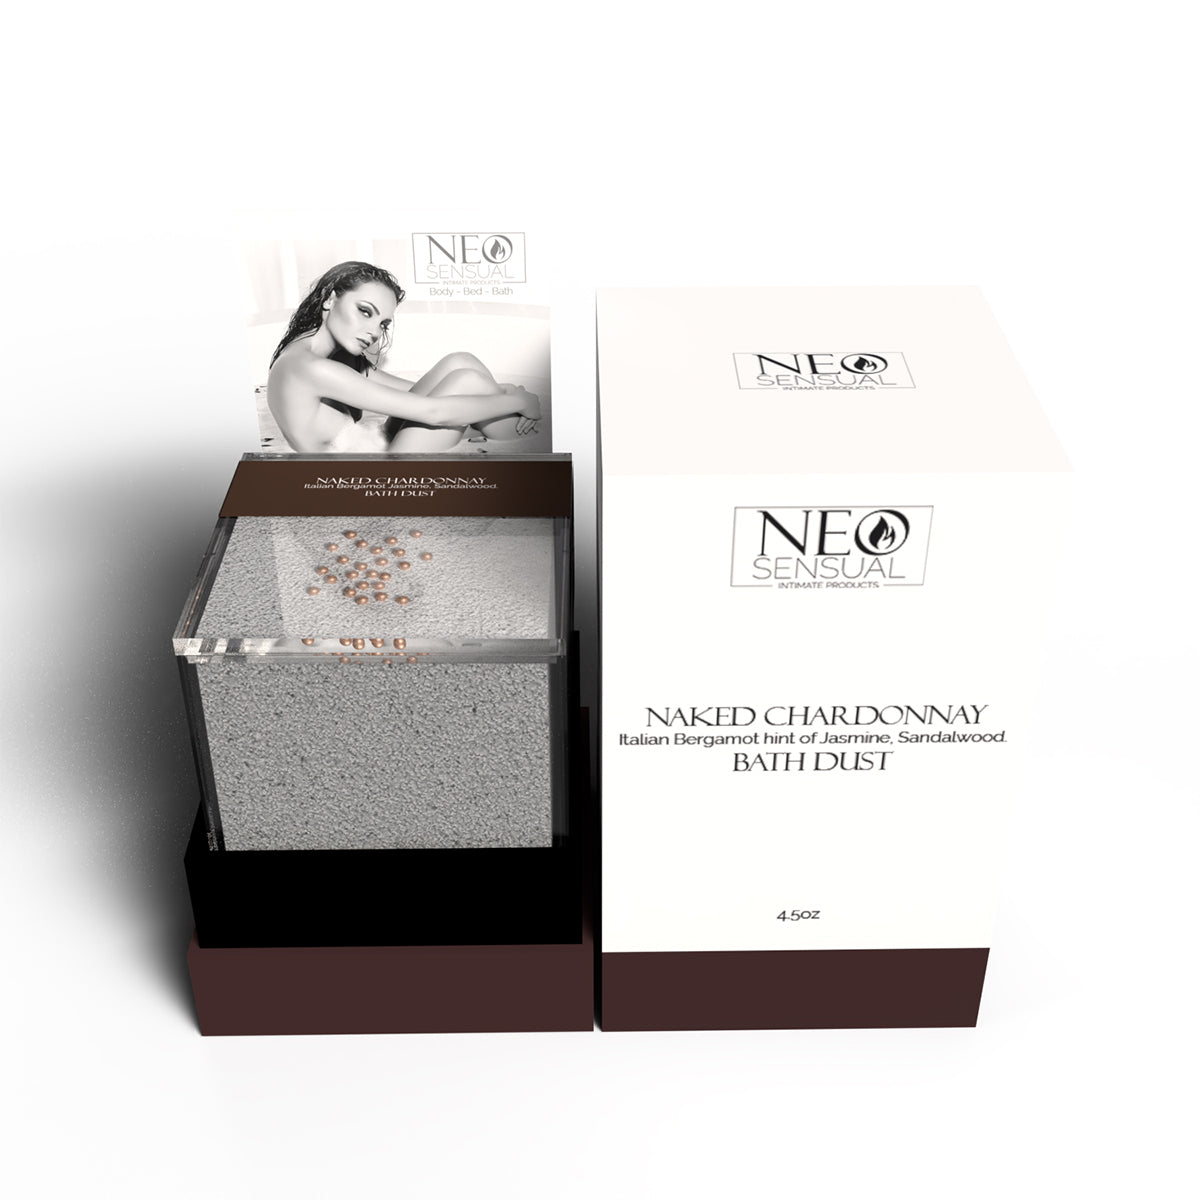 NEO Sensual Bath Dust 4.5oz - Naked Chardonnay